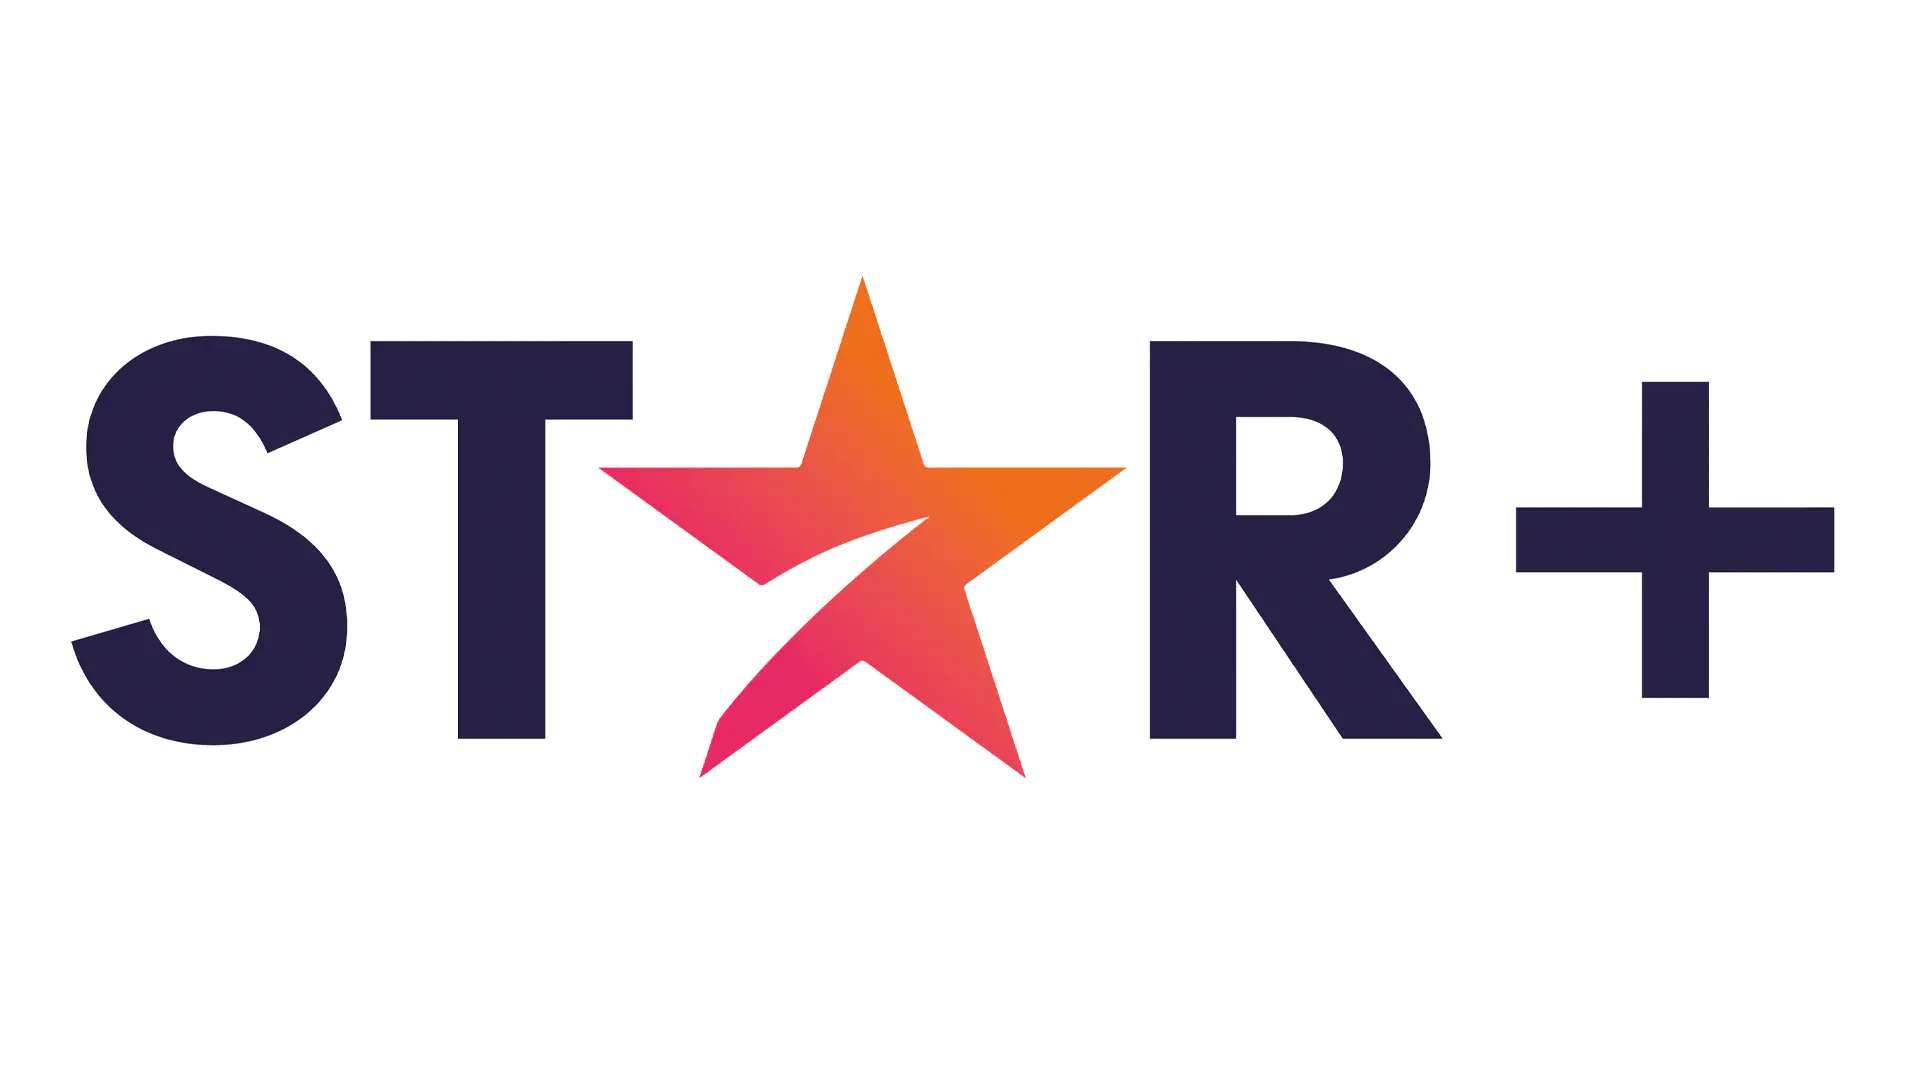 Star Plus Logo 2022